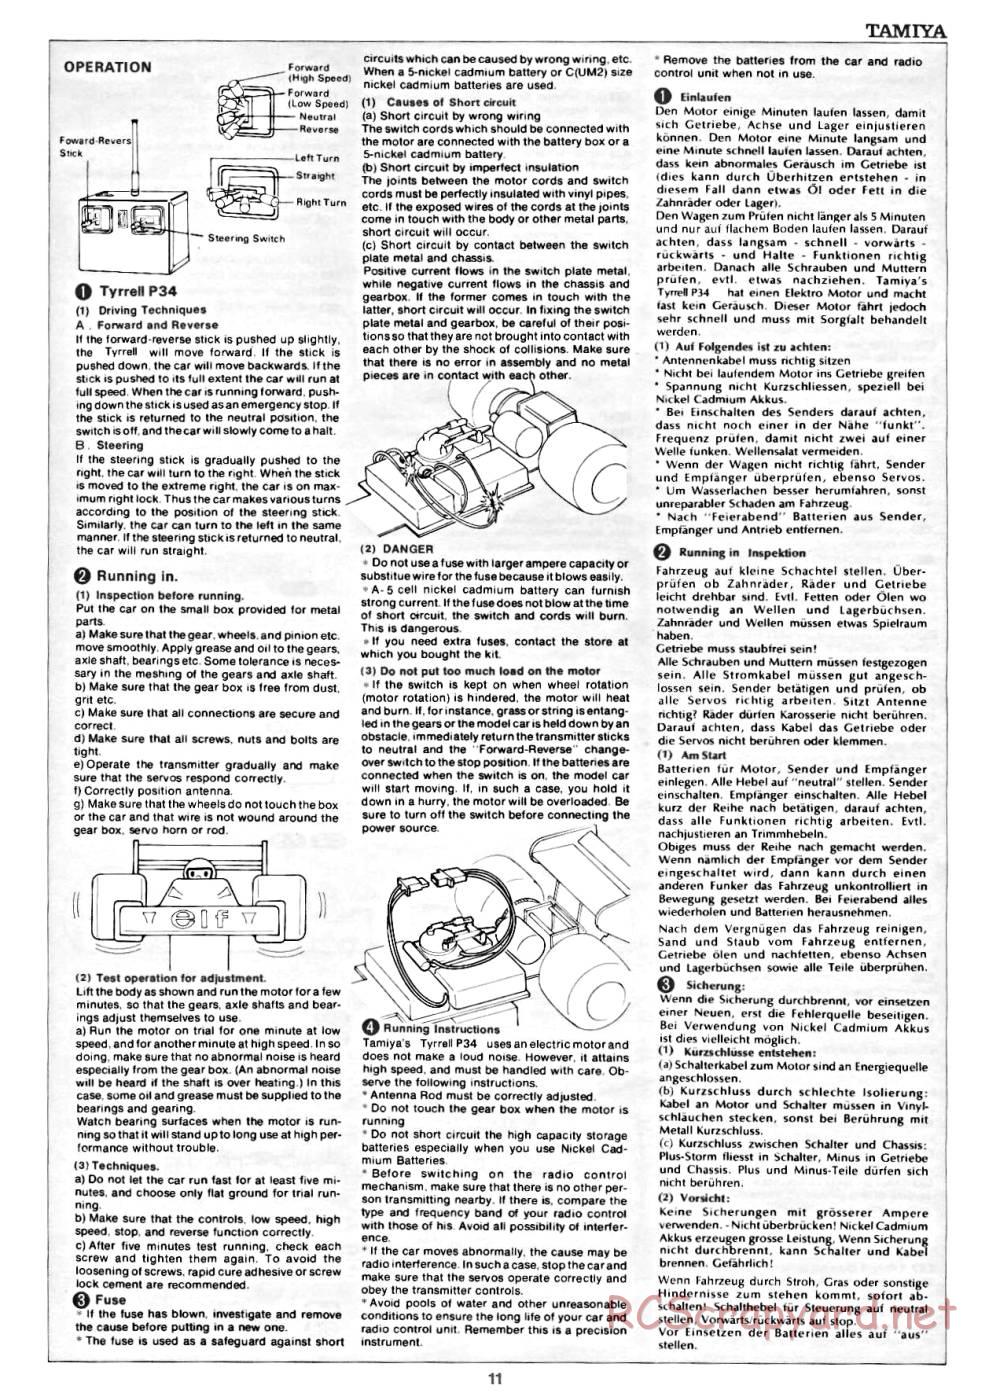 Tamiya - Tyrrell P34 Six Wheeler - 58003 - Manual - Page 11